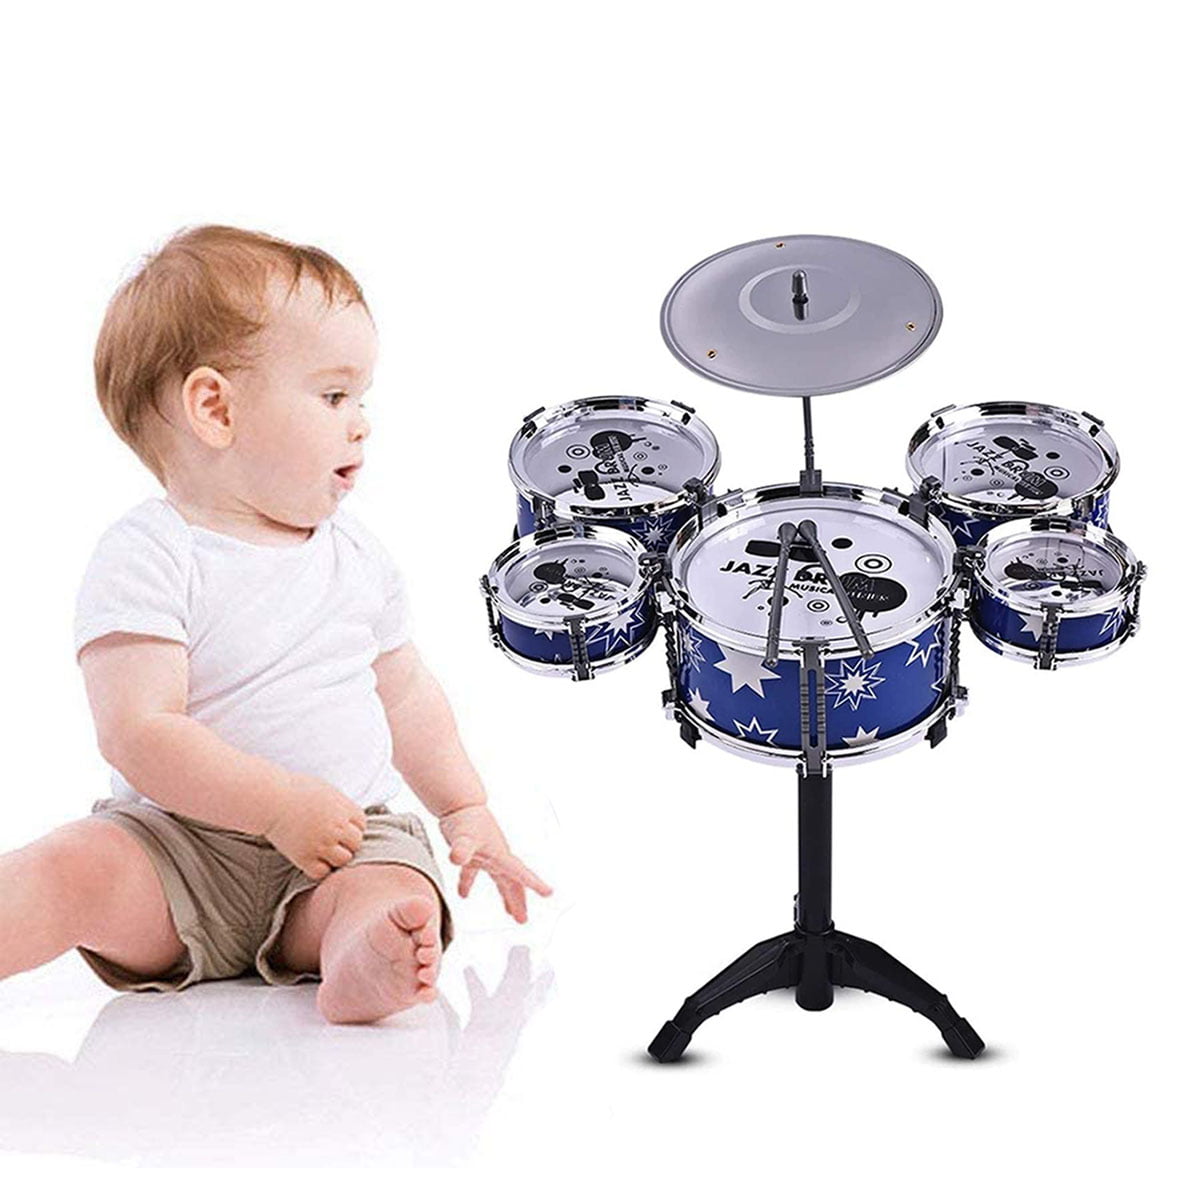 Children 3/5 Drum Drumsticks Stool Set Jazz Band Kit Instrument Musical Toy Gift 